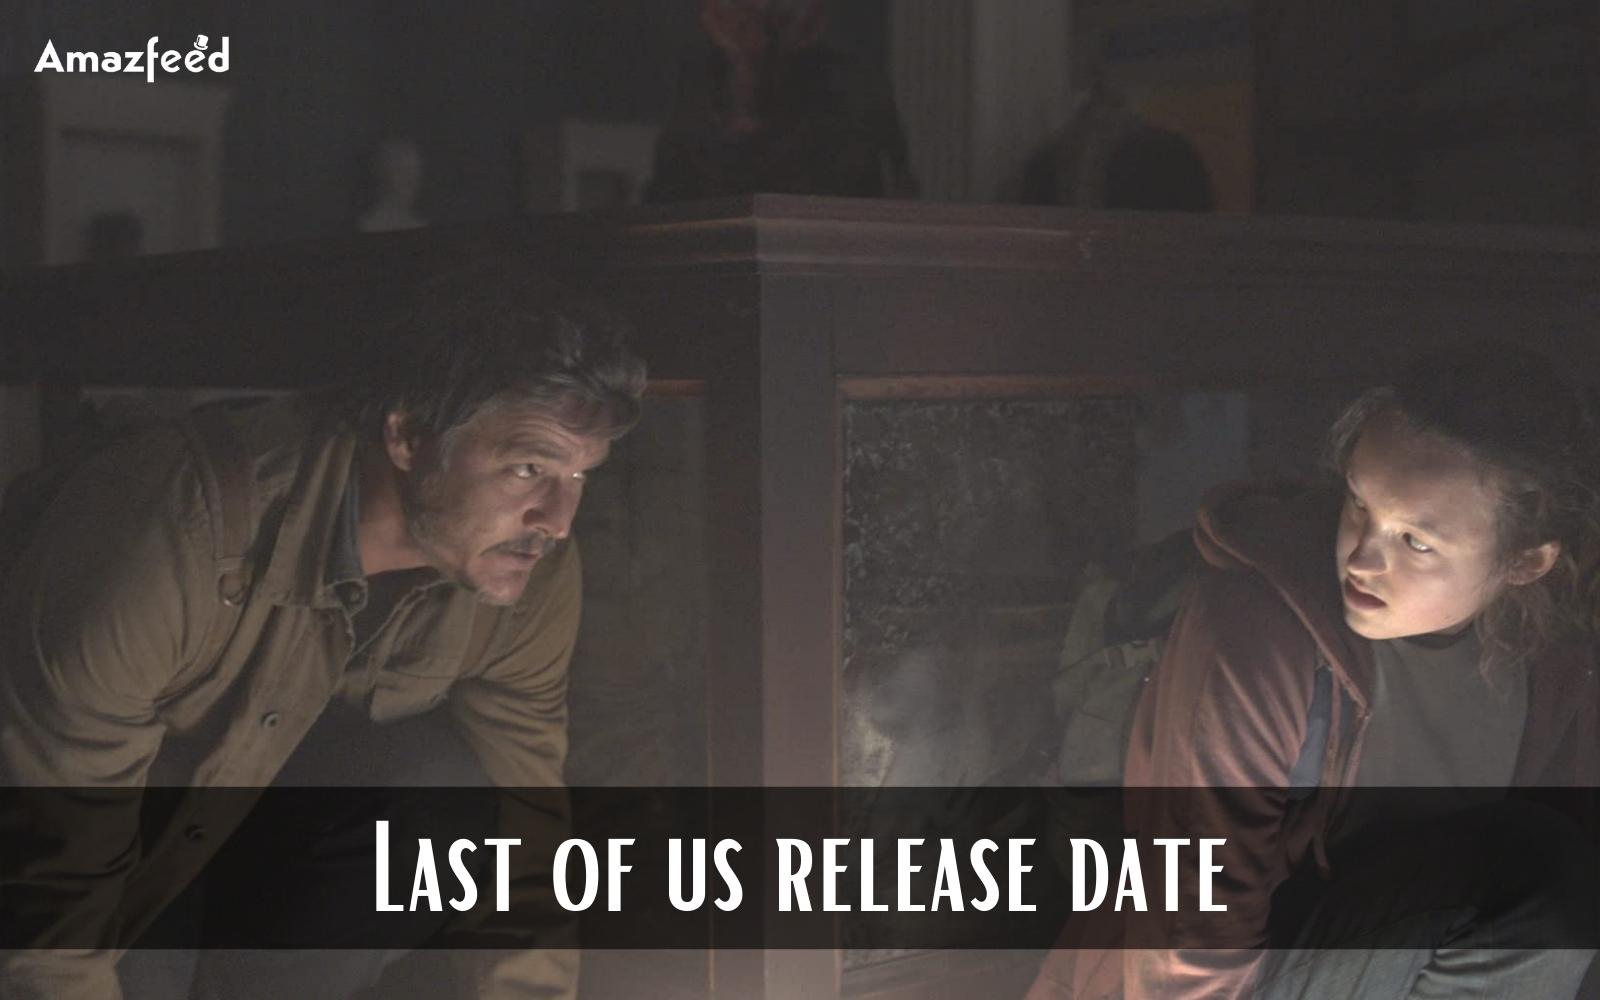 Last of us release date